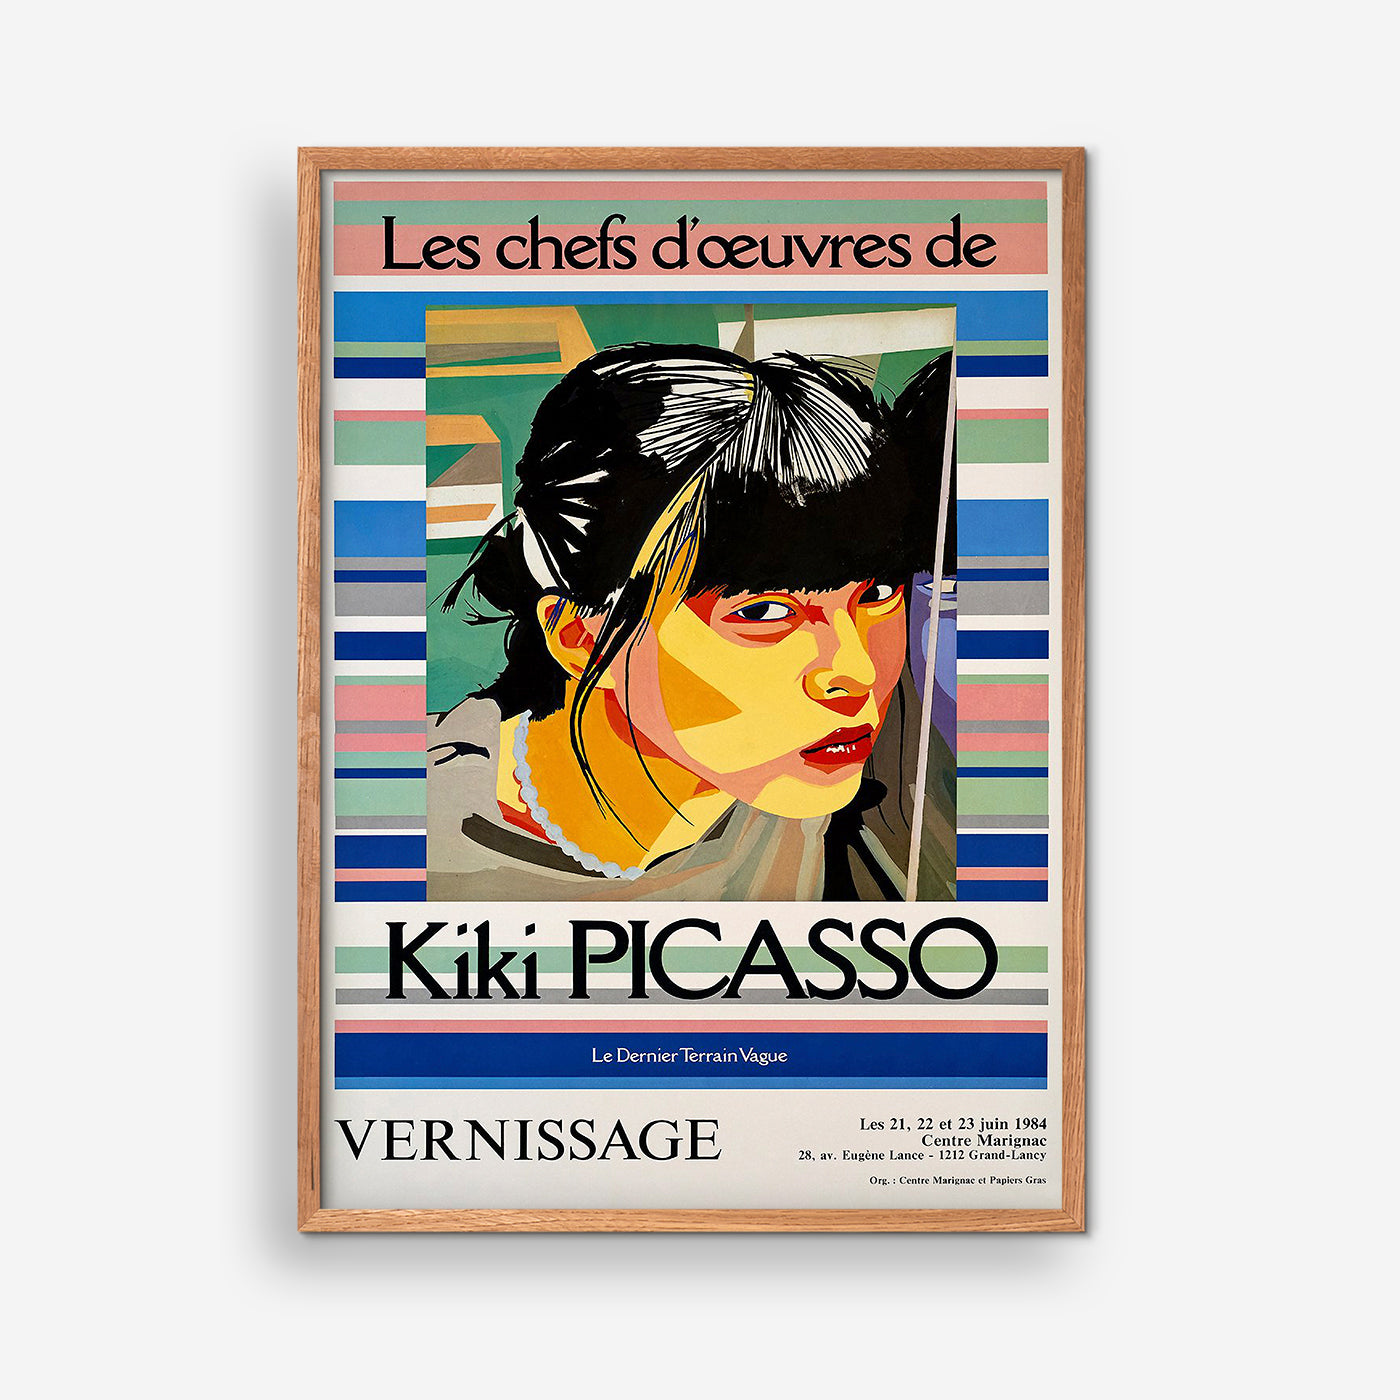 Vernissage exhibition poster - Kiki Picasso